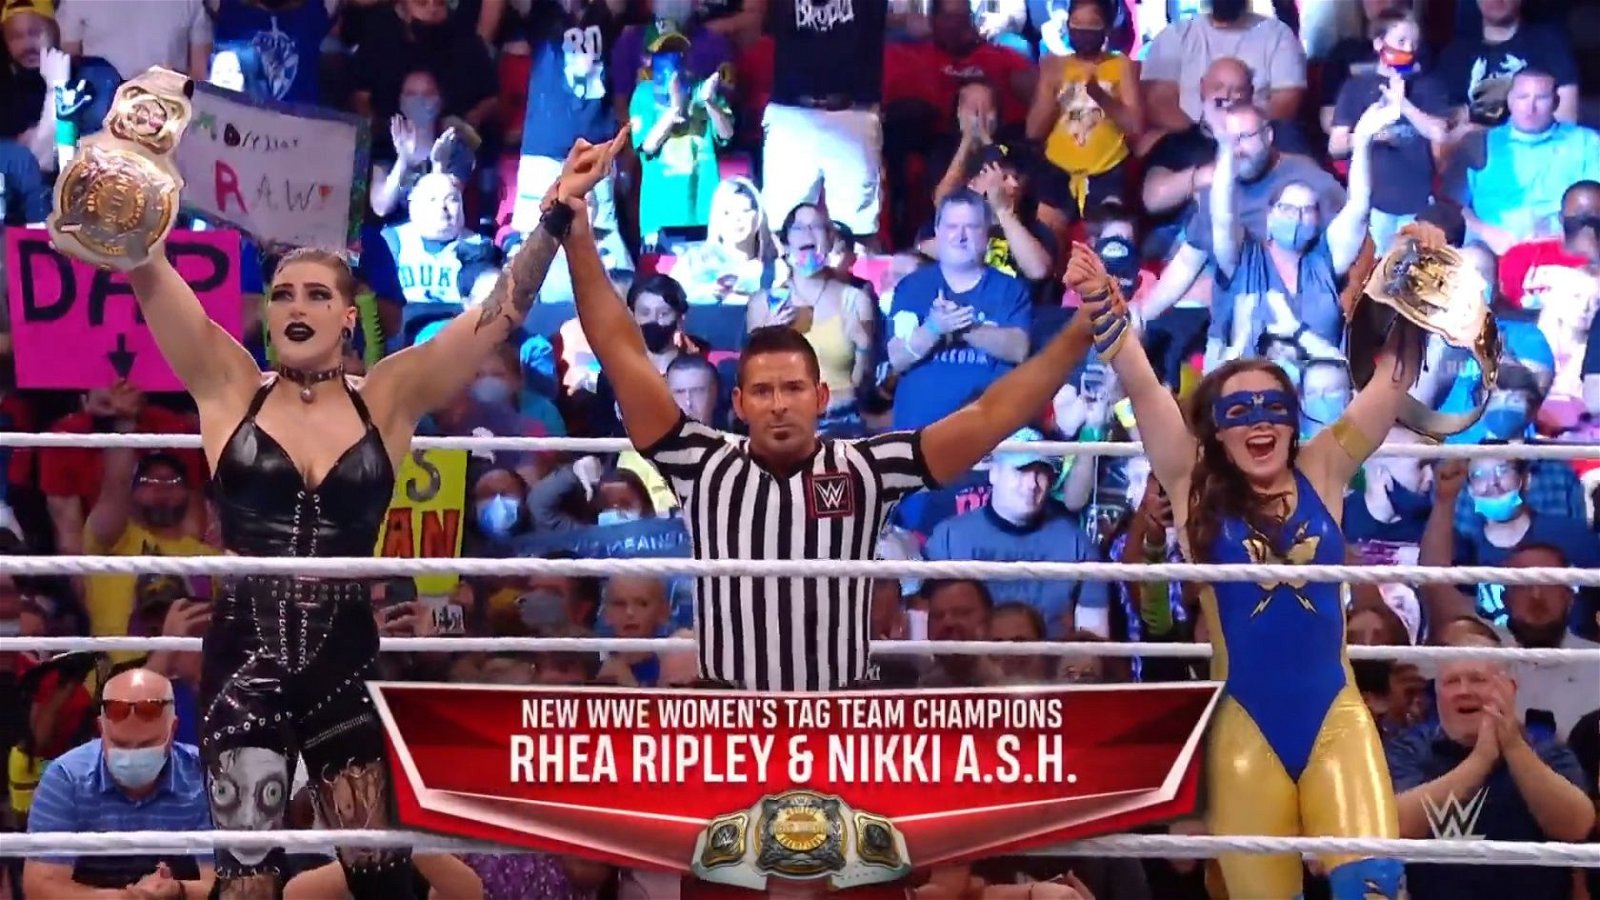 Rhea Ripley & Nikki A.S.H Win Women’s Tag Team Championship